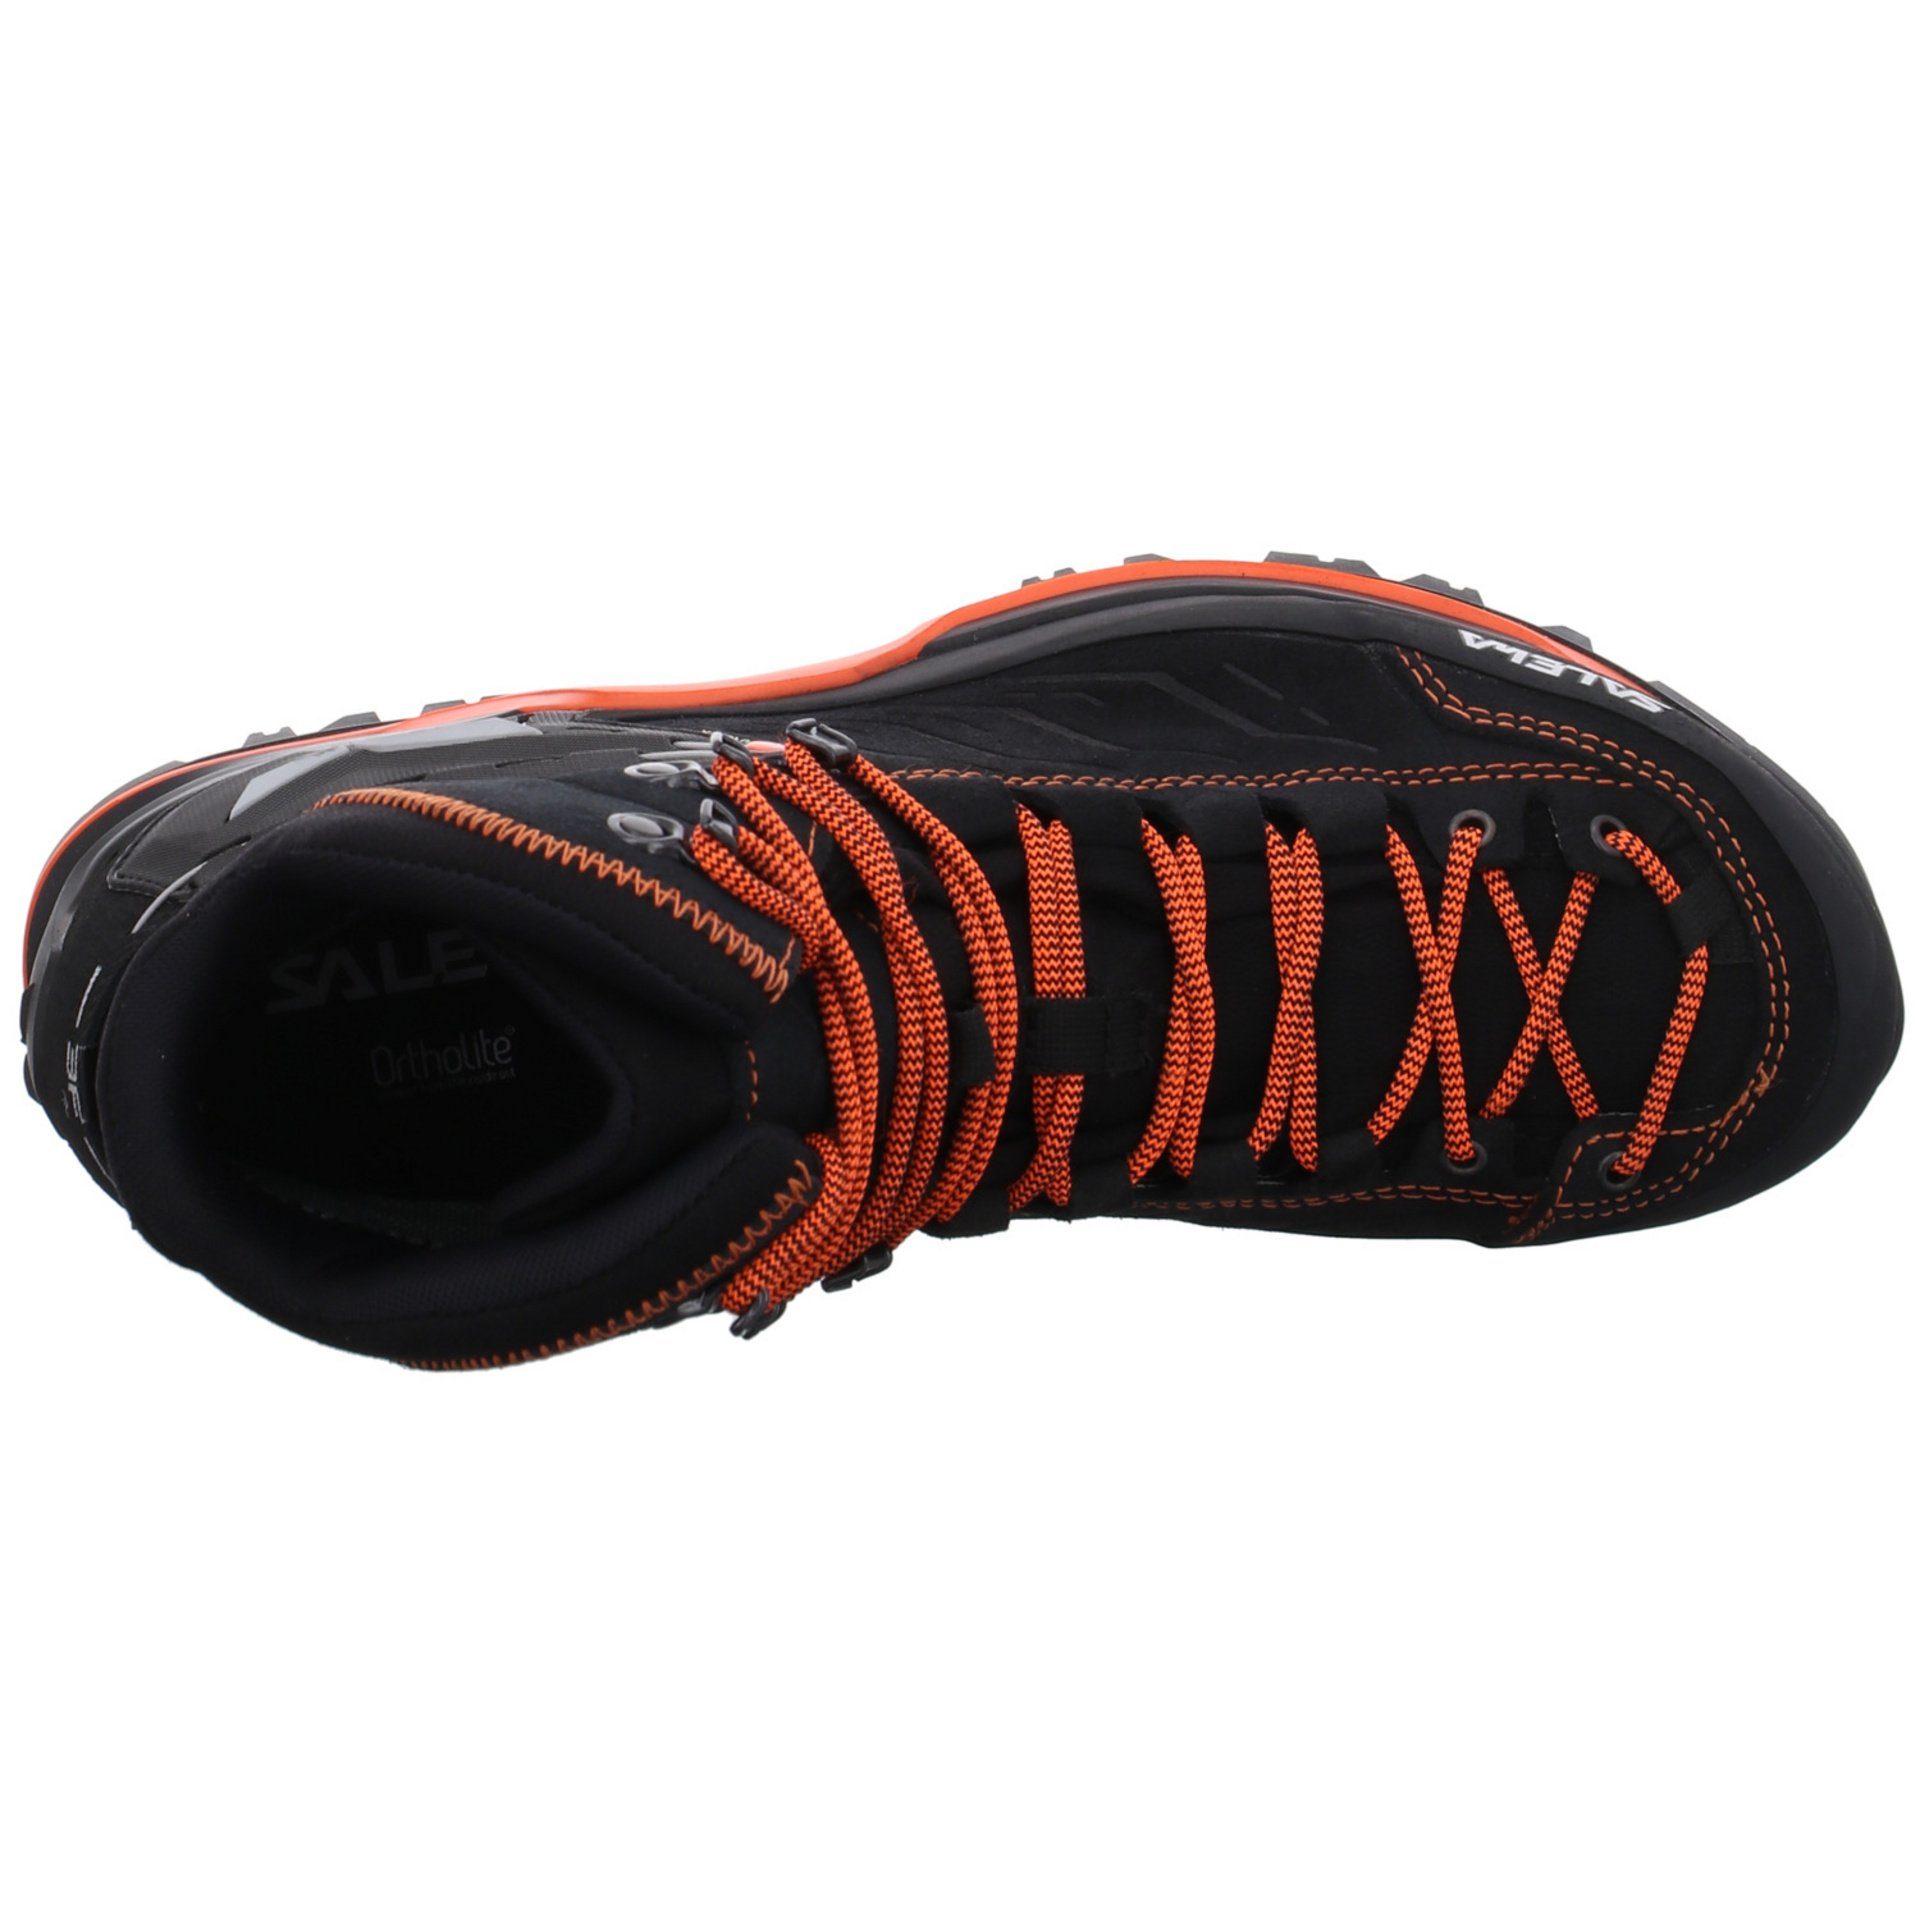 Salewa Herren Outdoor Schuhe ORANGE Leder-/Textilkombination Outdoorschuh ASPHALT/FLUO